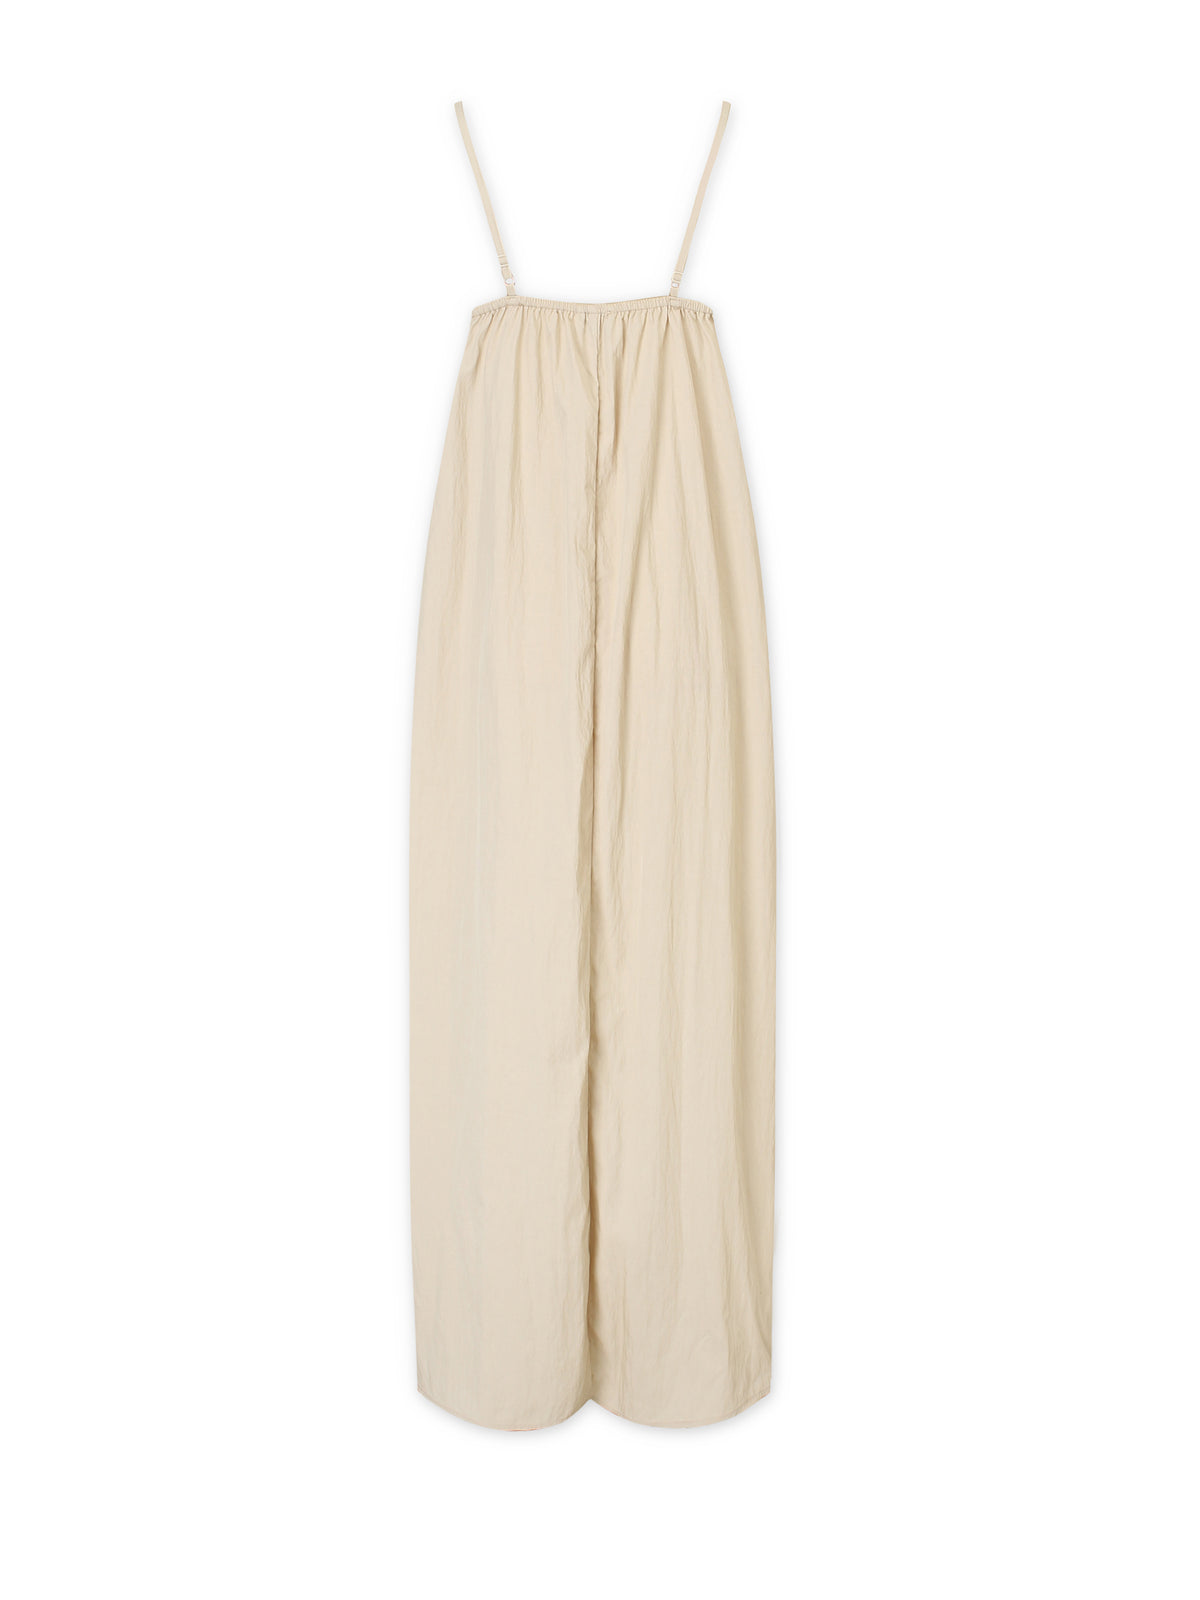 Crinkle Cotton Slip Dress-Tan